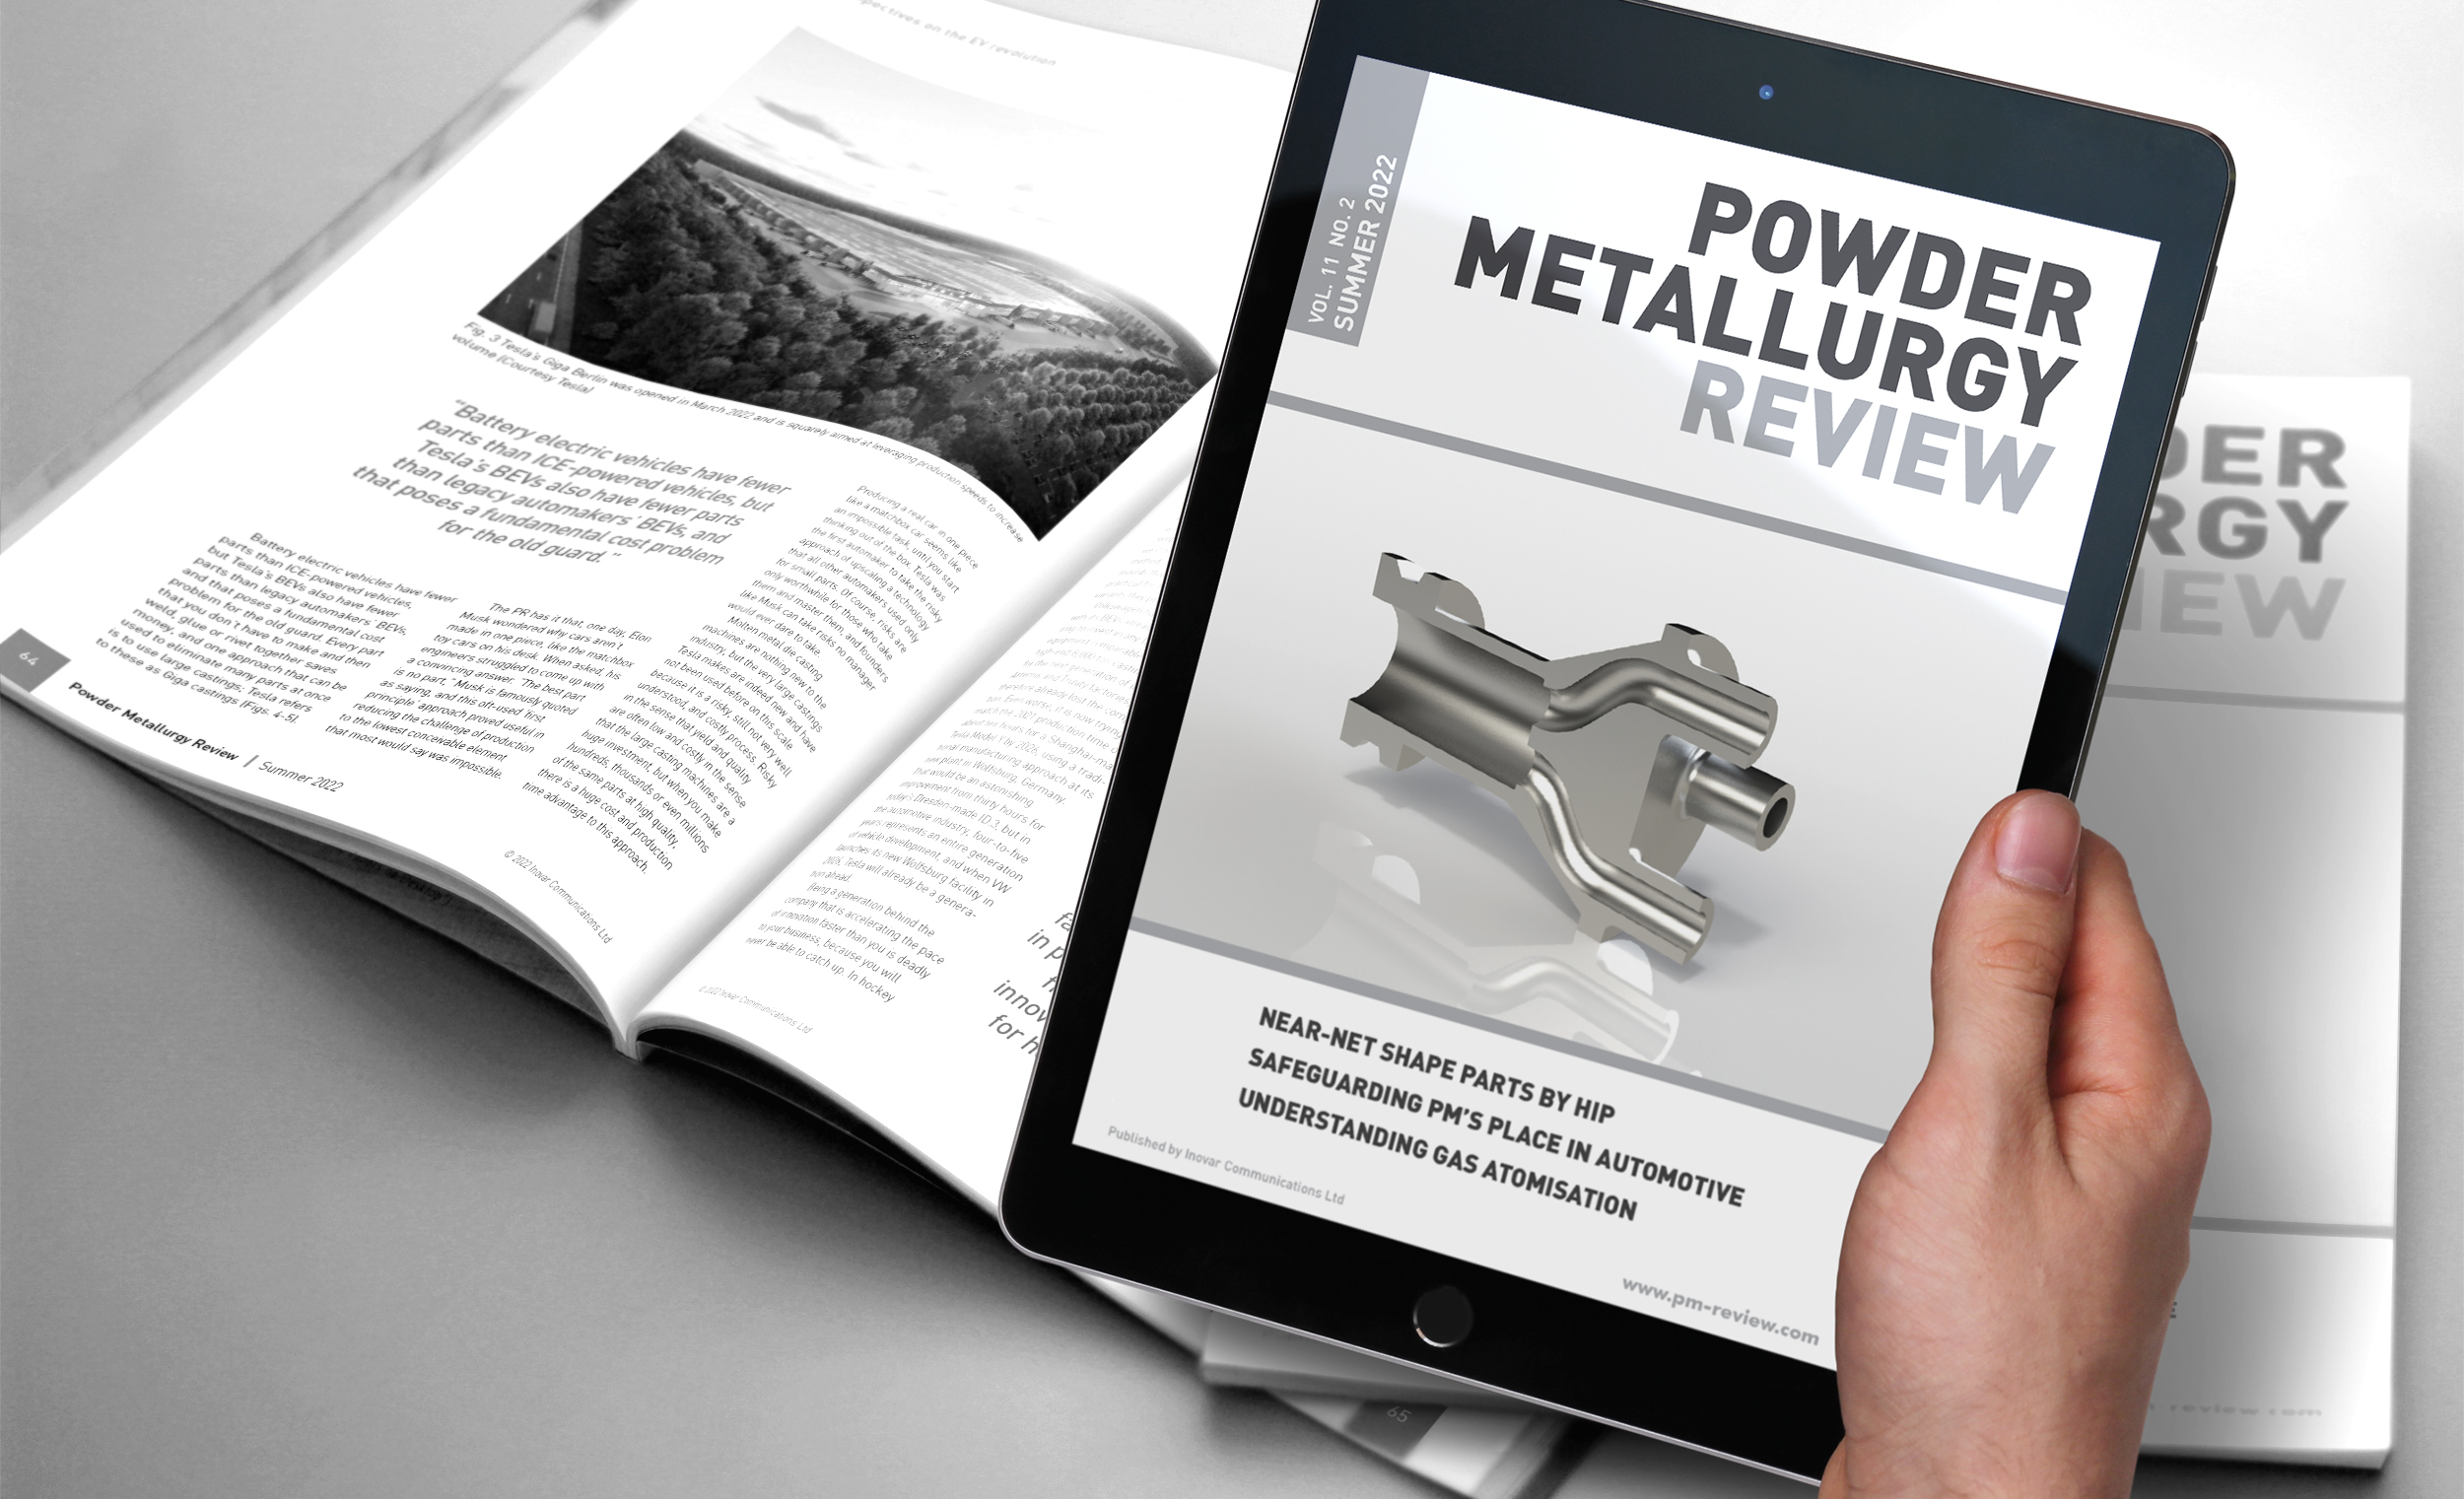 Powder Metallurgy Review magazine cover